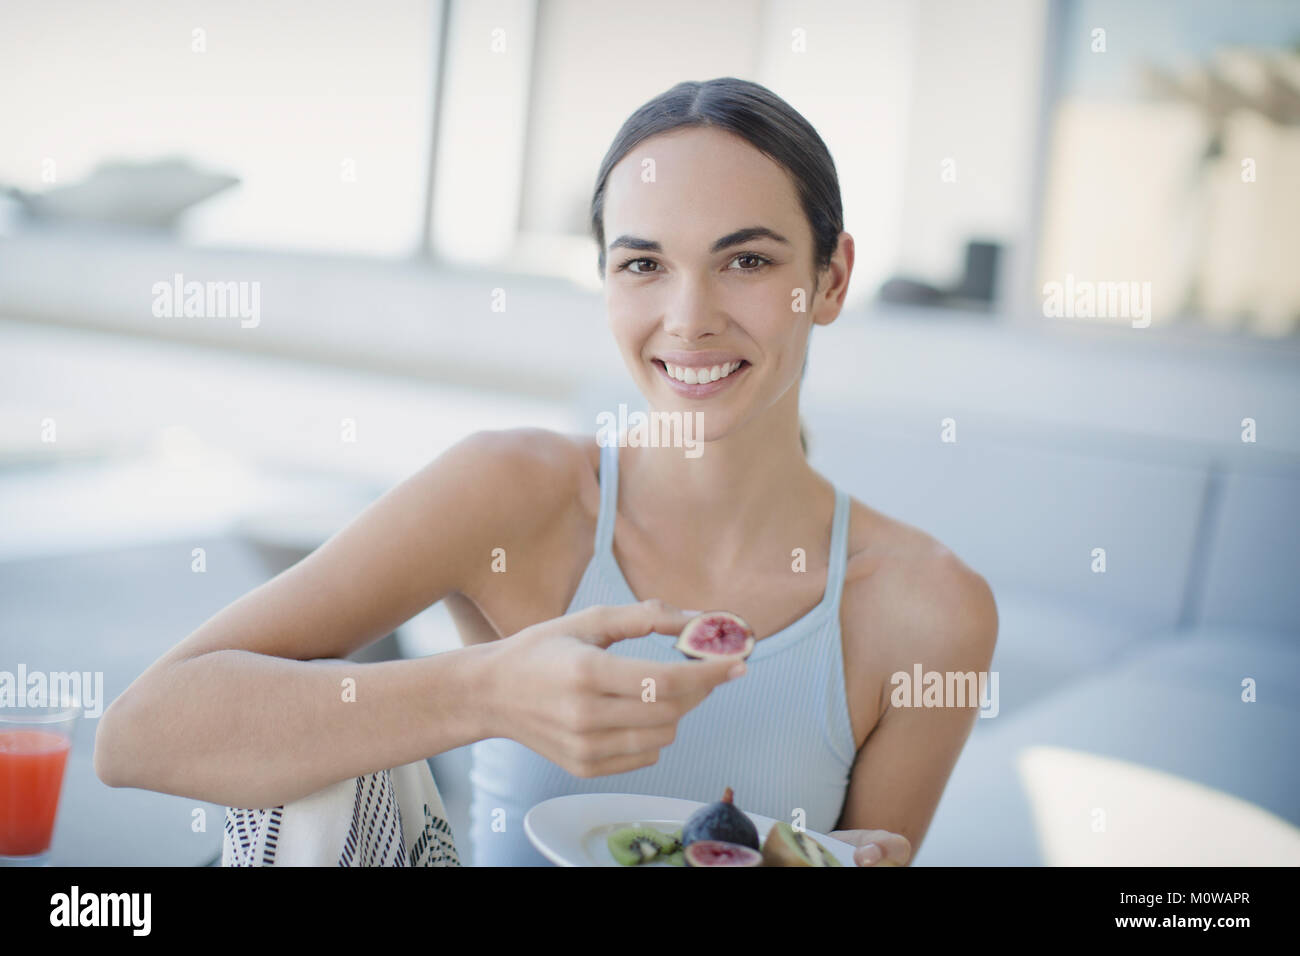 Portrait smiling, confident brunette woman eating figs Stock Photo